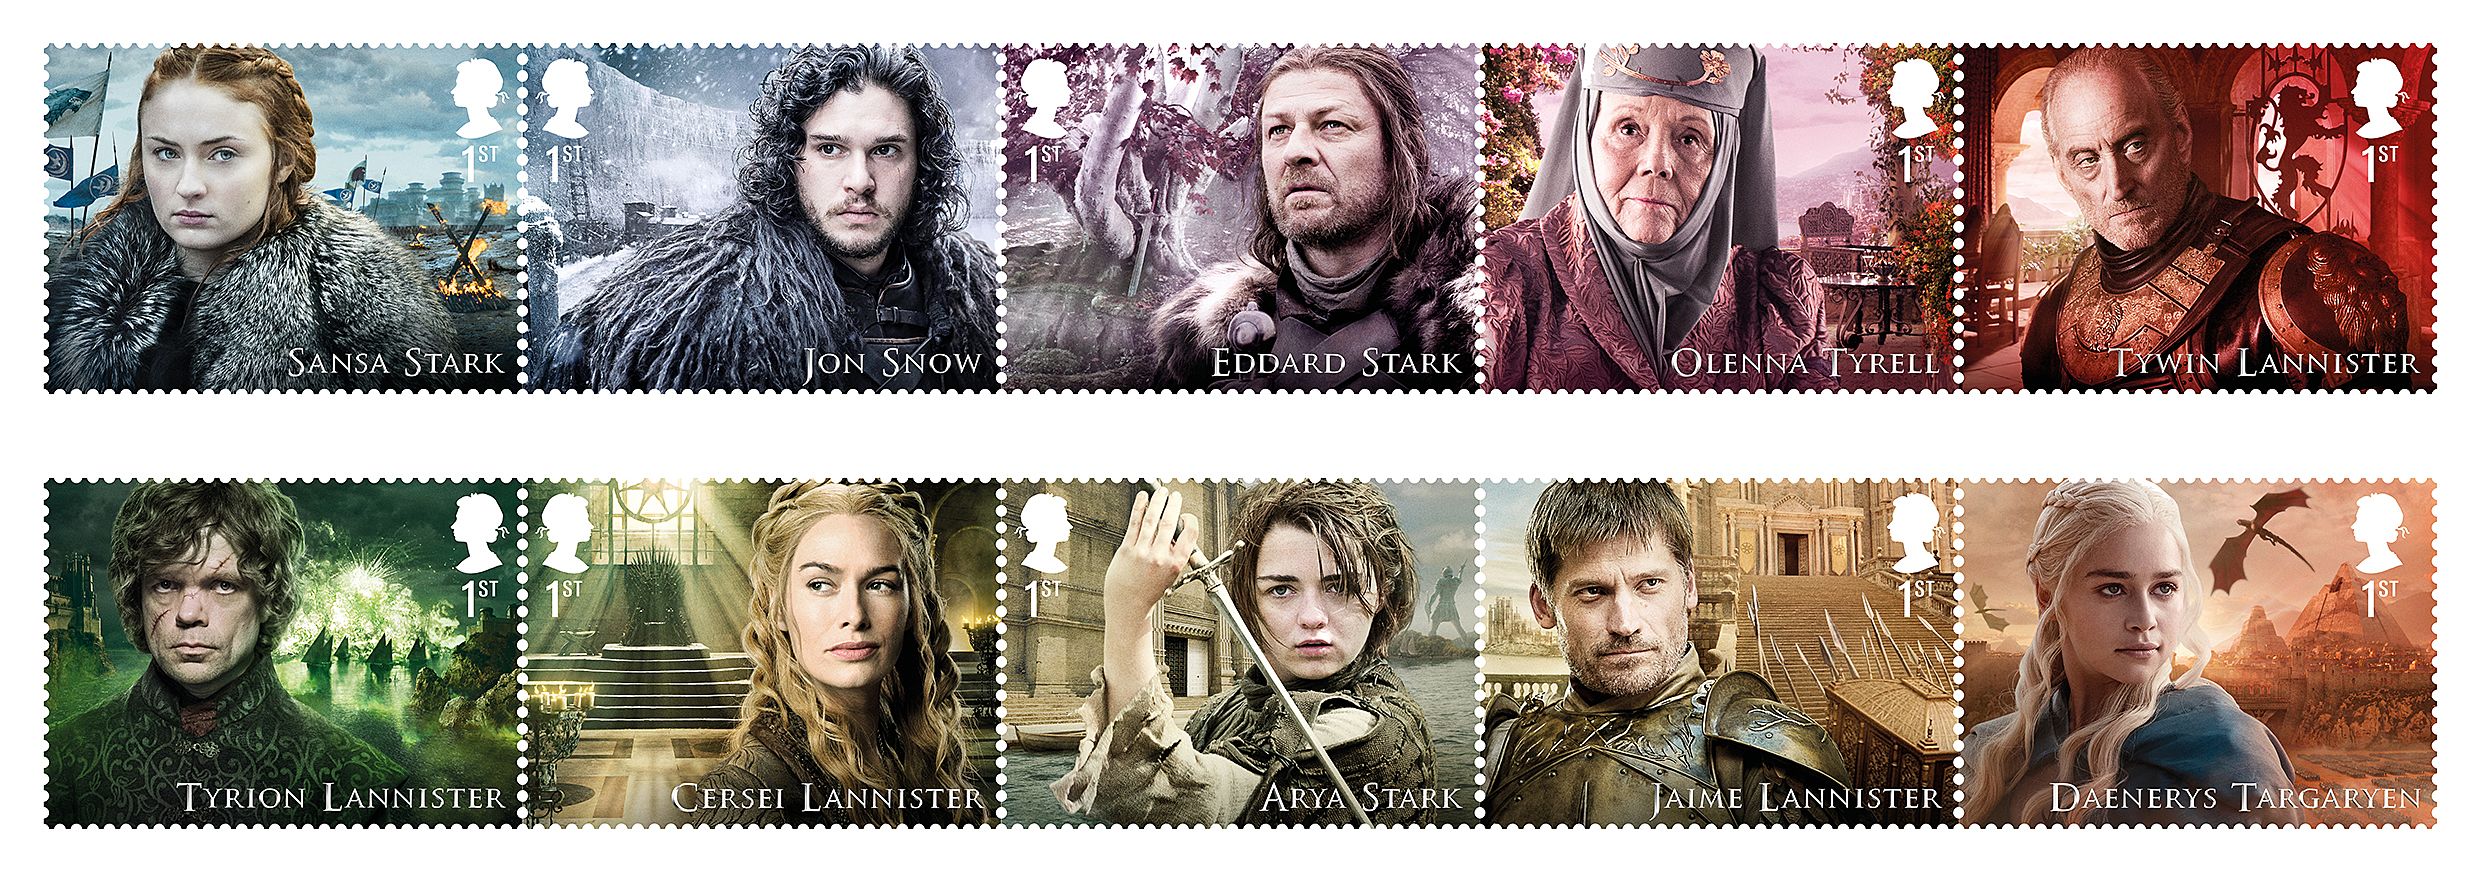 GoT-stamps-Full-set